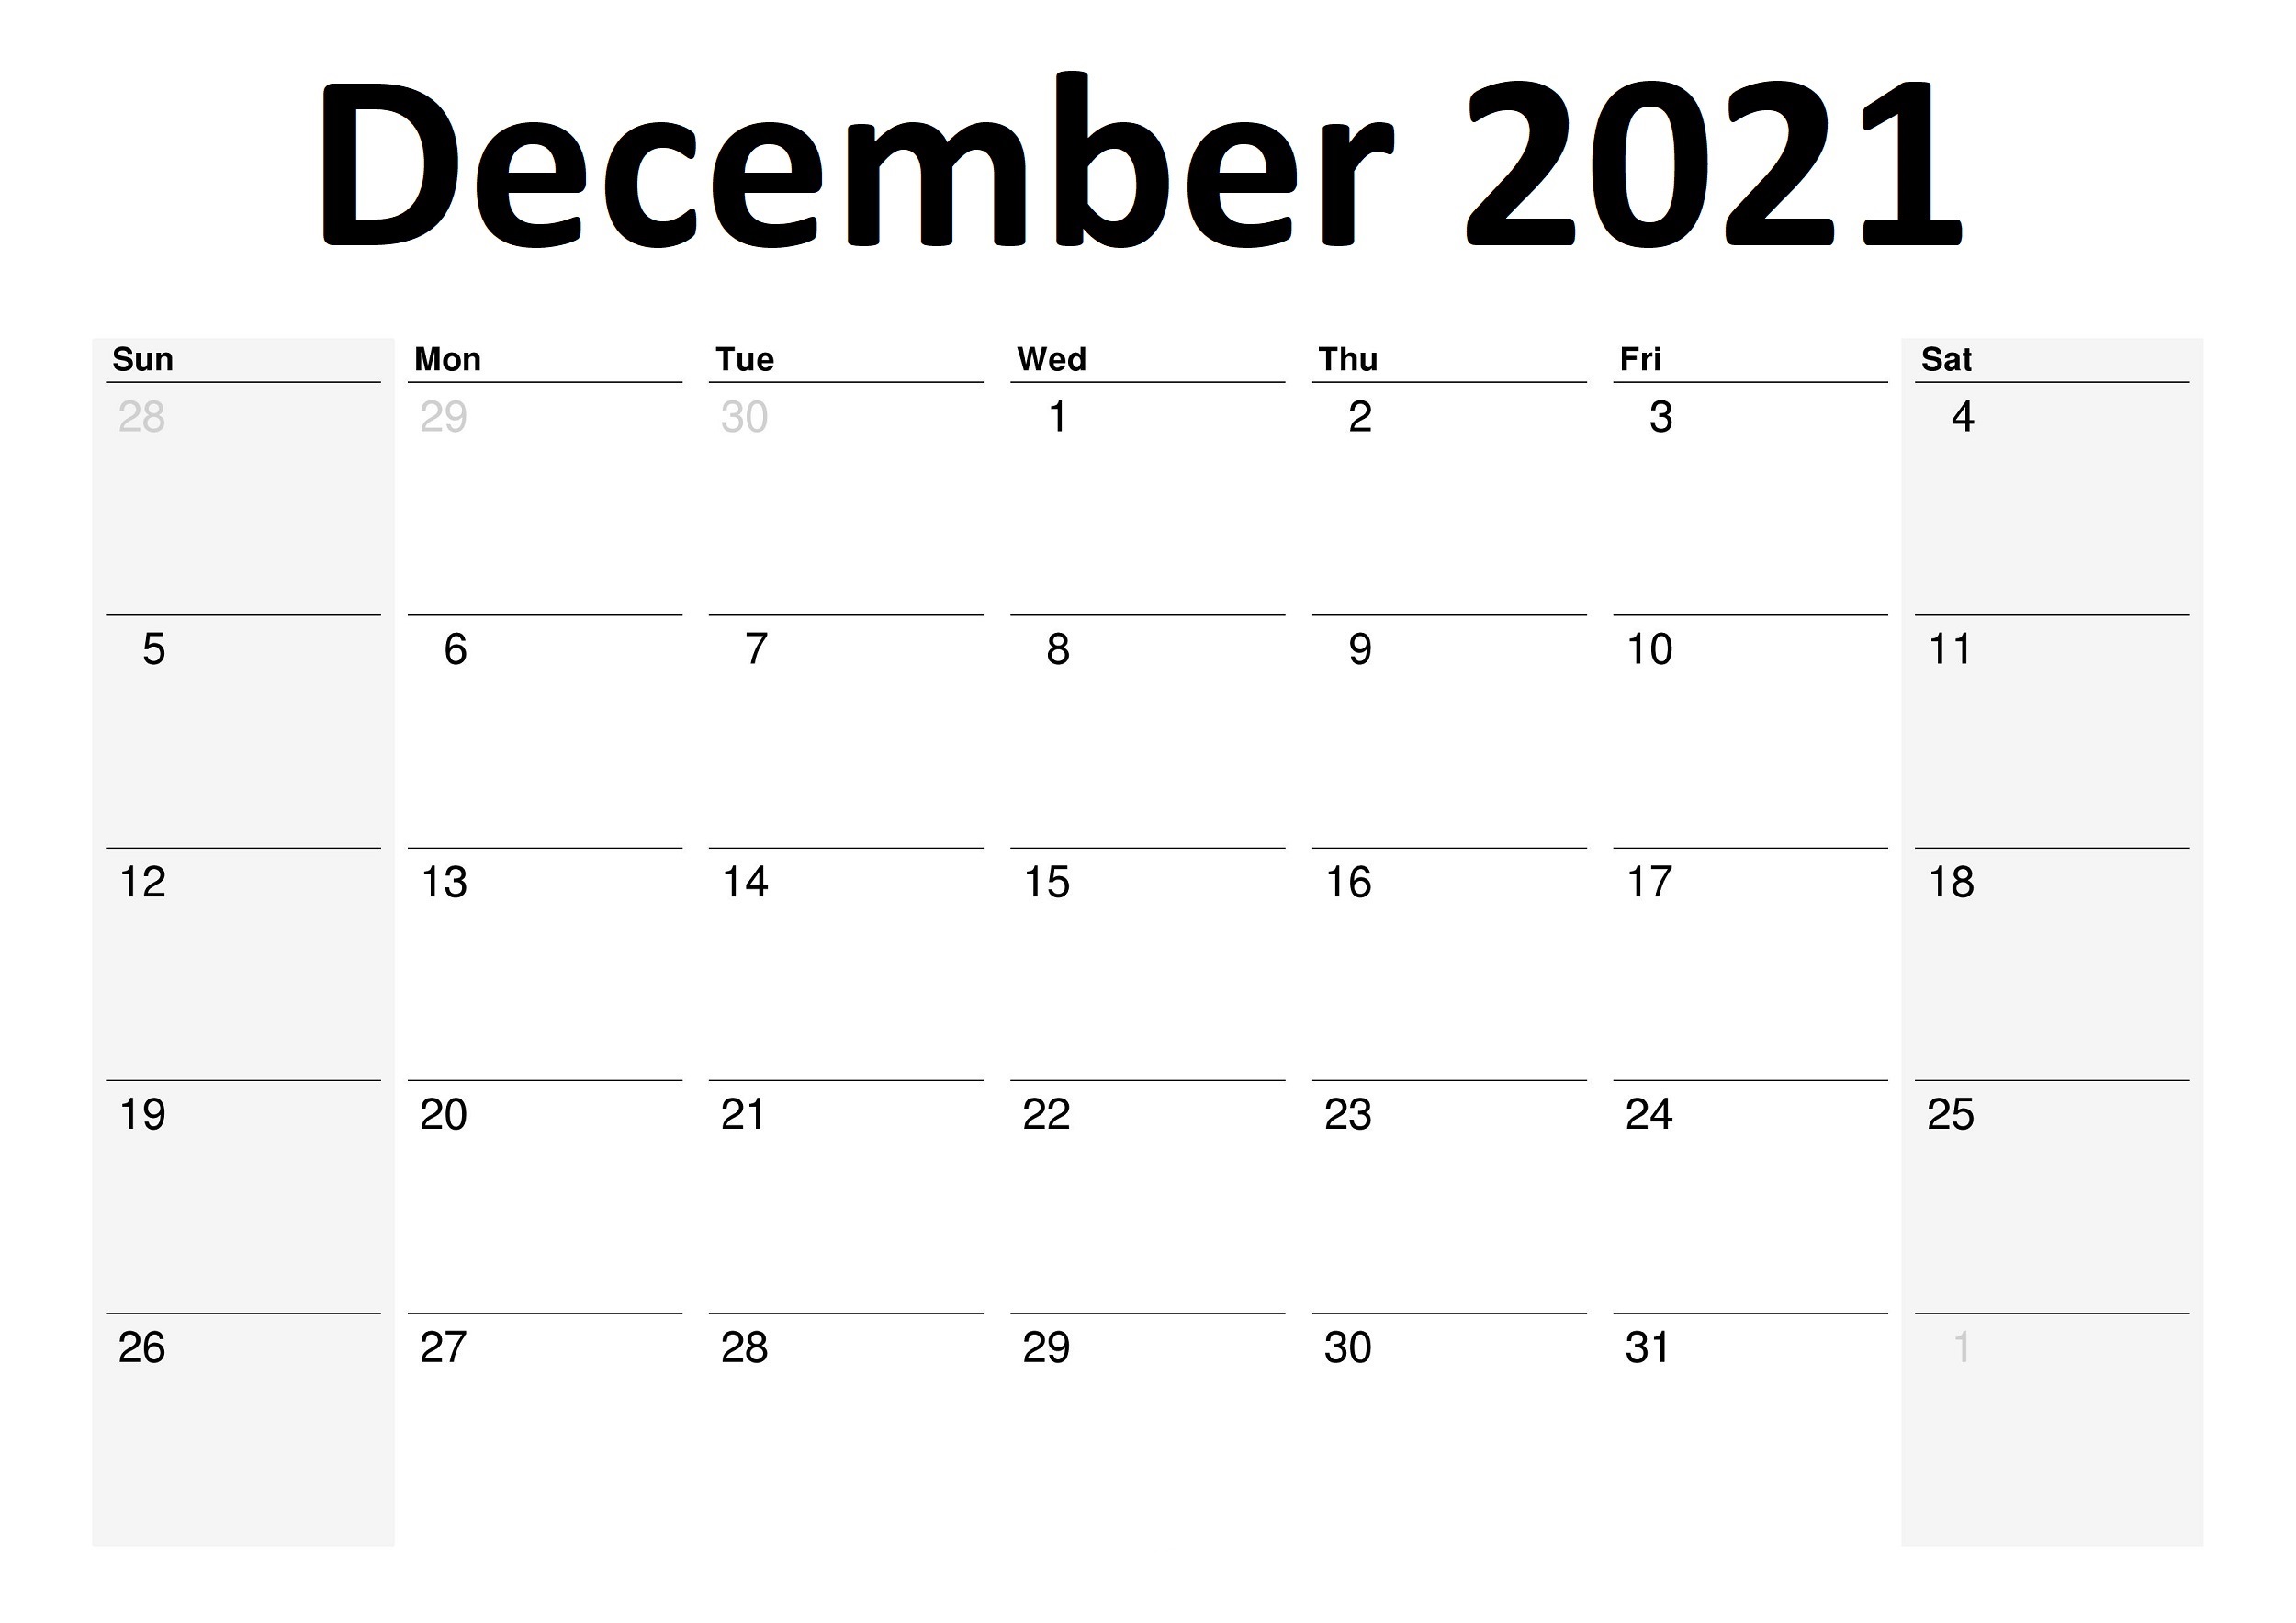 December 2021 Printable Calendar Date Range